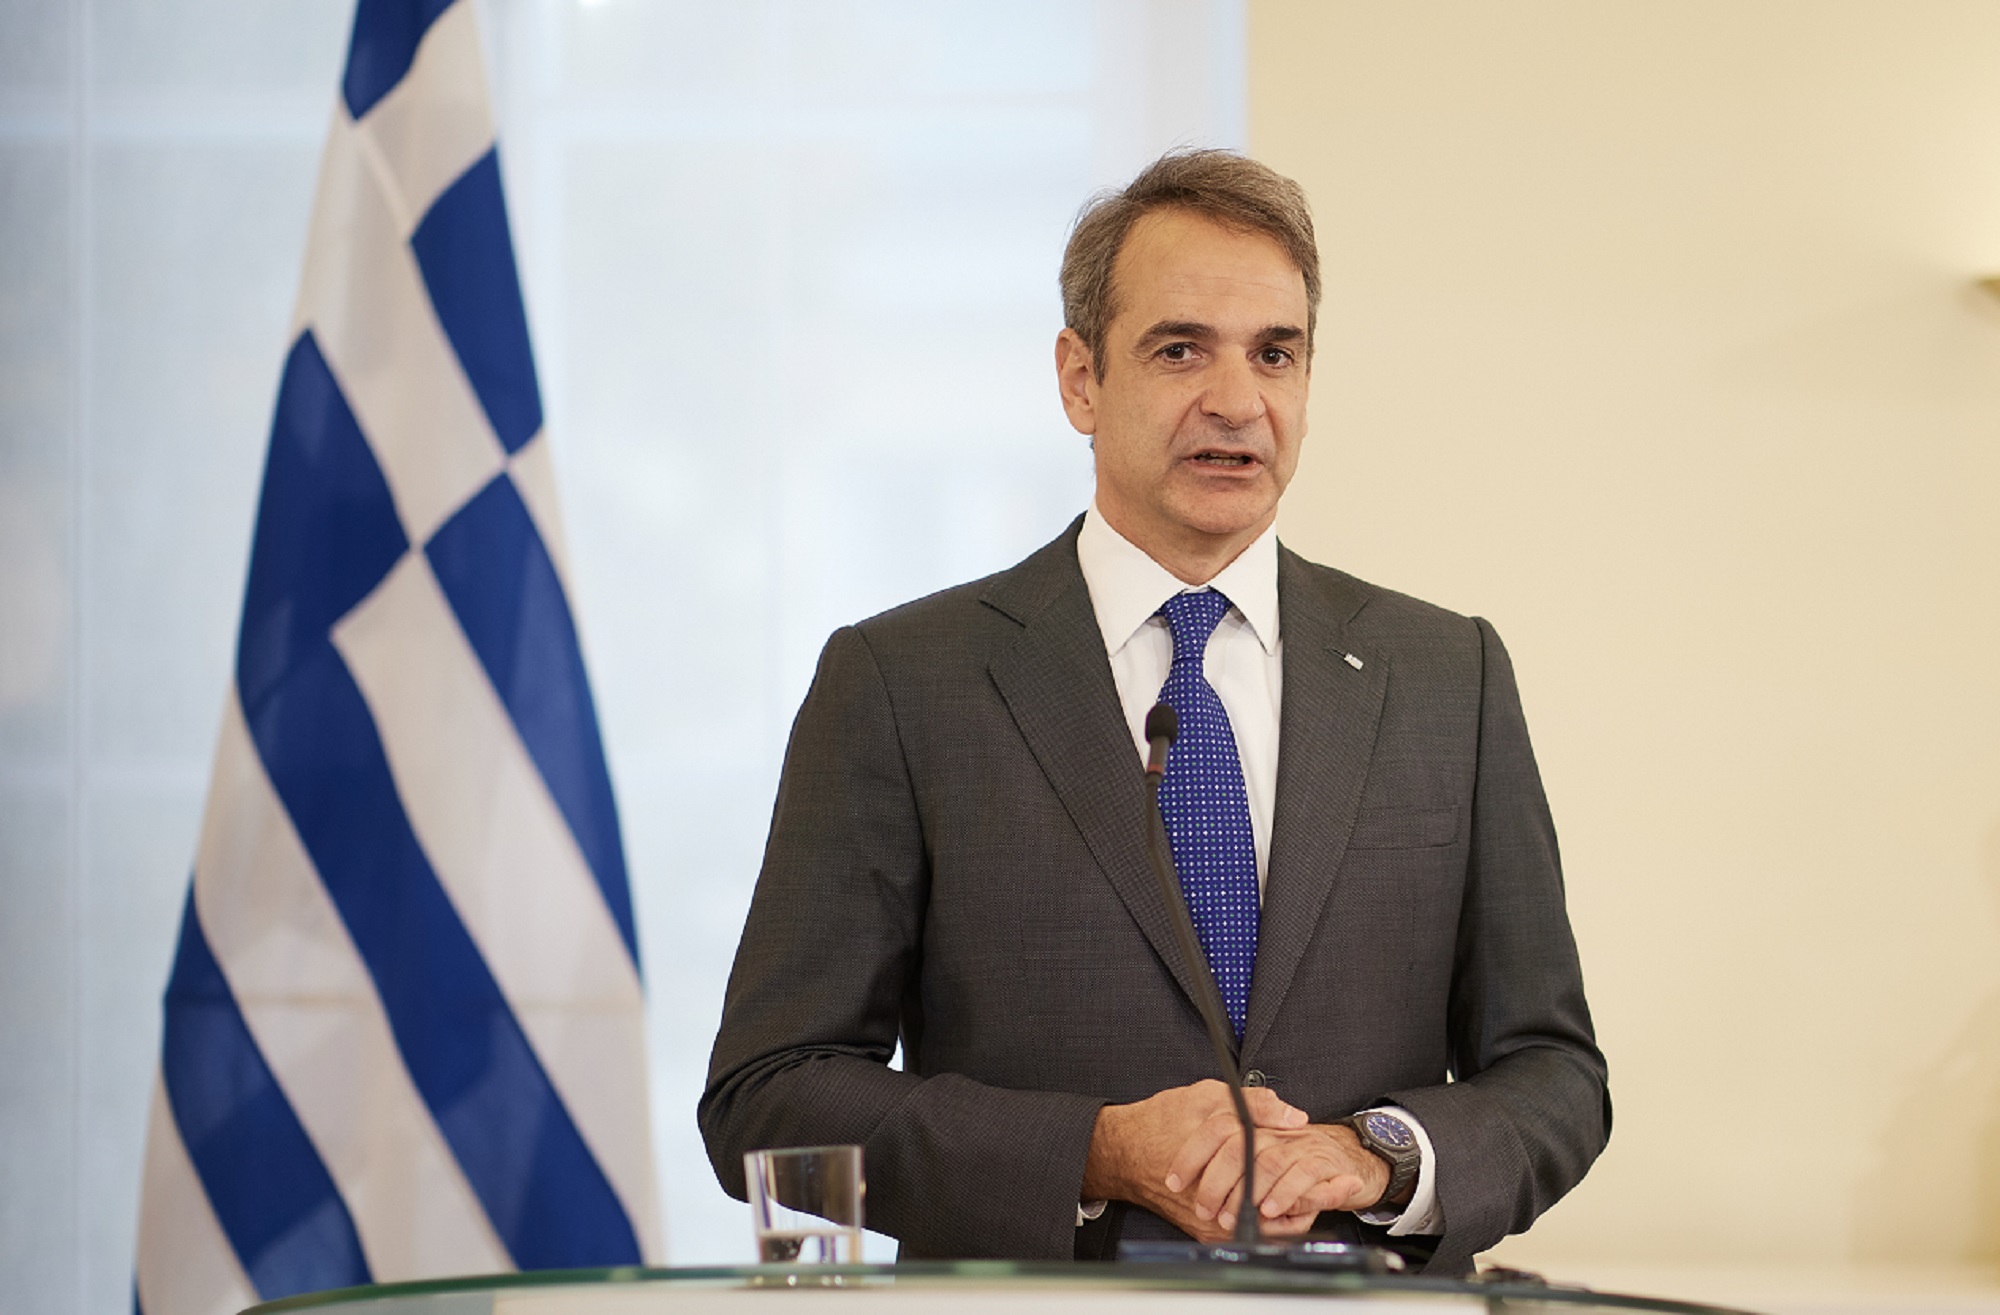 K. Μητσοτάκης: Προς μία πιο ισχυρή, πιο σύγχρονη, πιο δίκαιη Ελλάδα για όλους